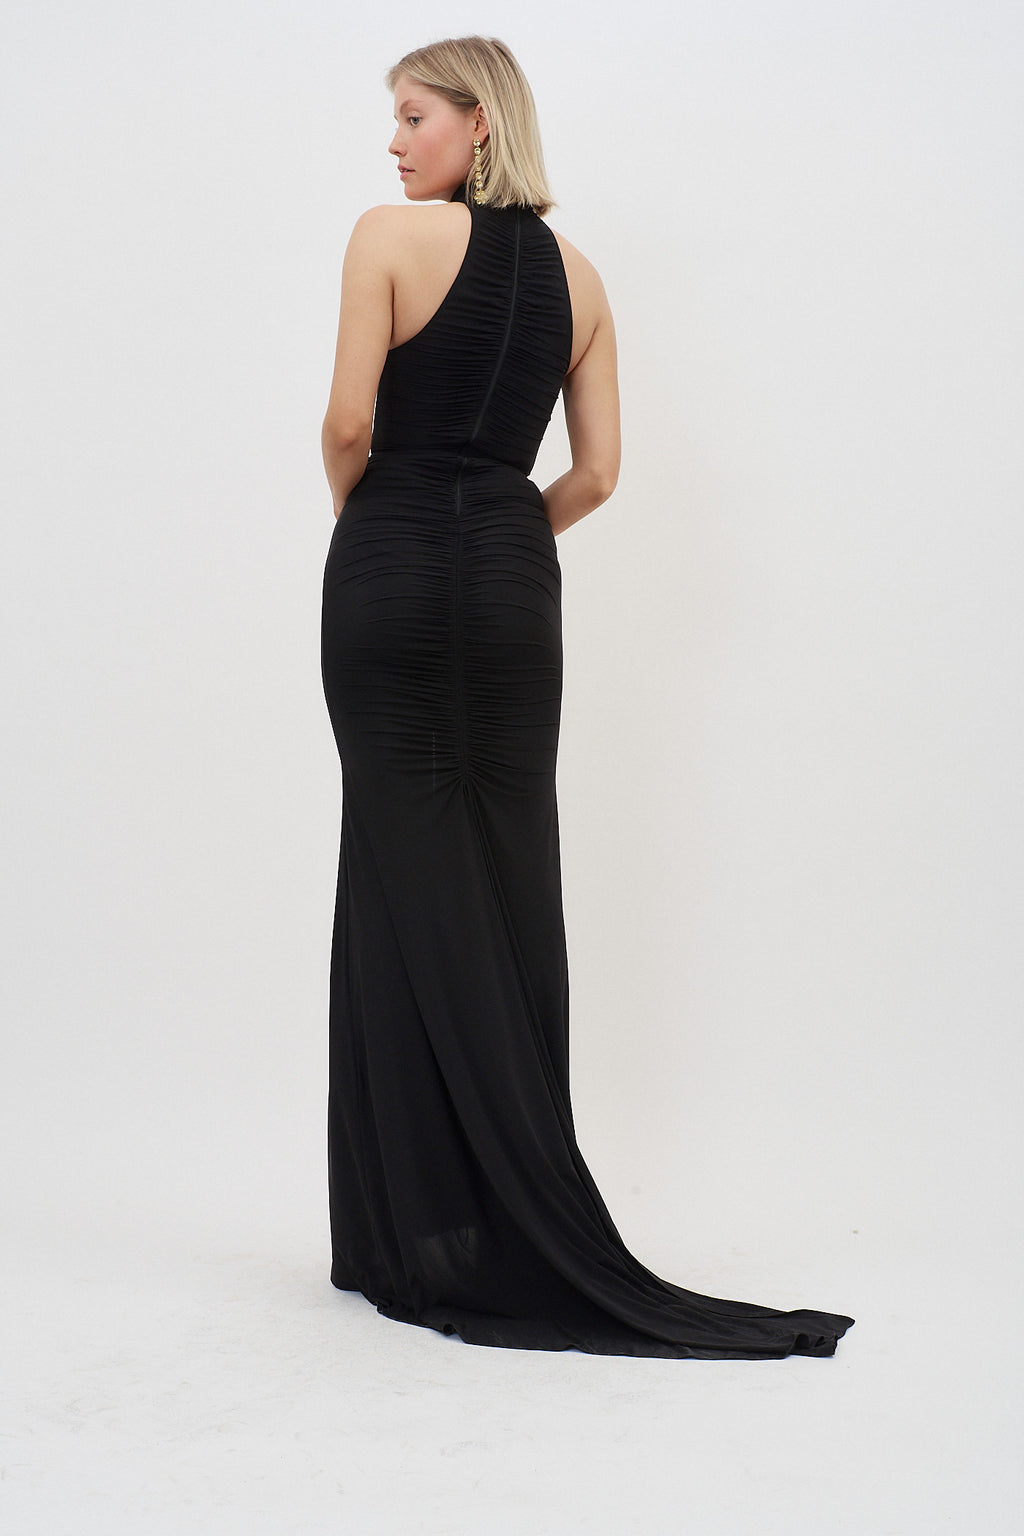 Lorne Black Dress